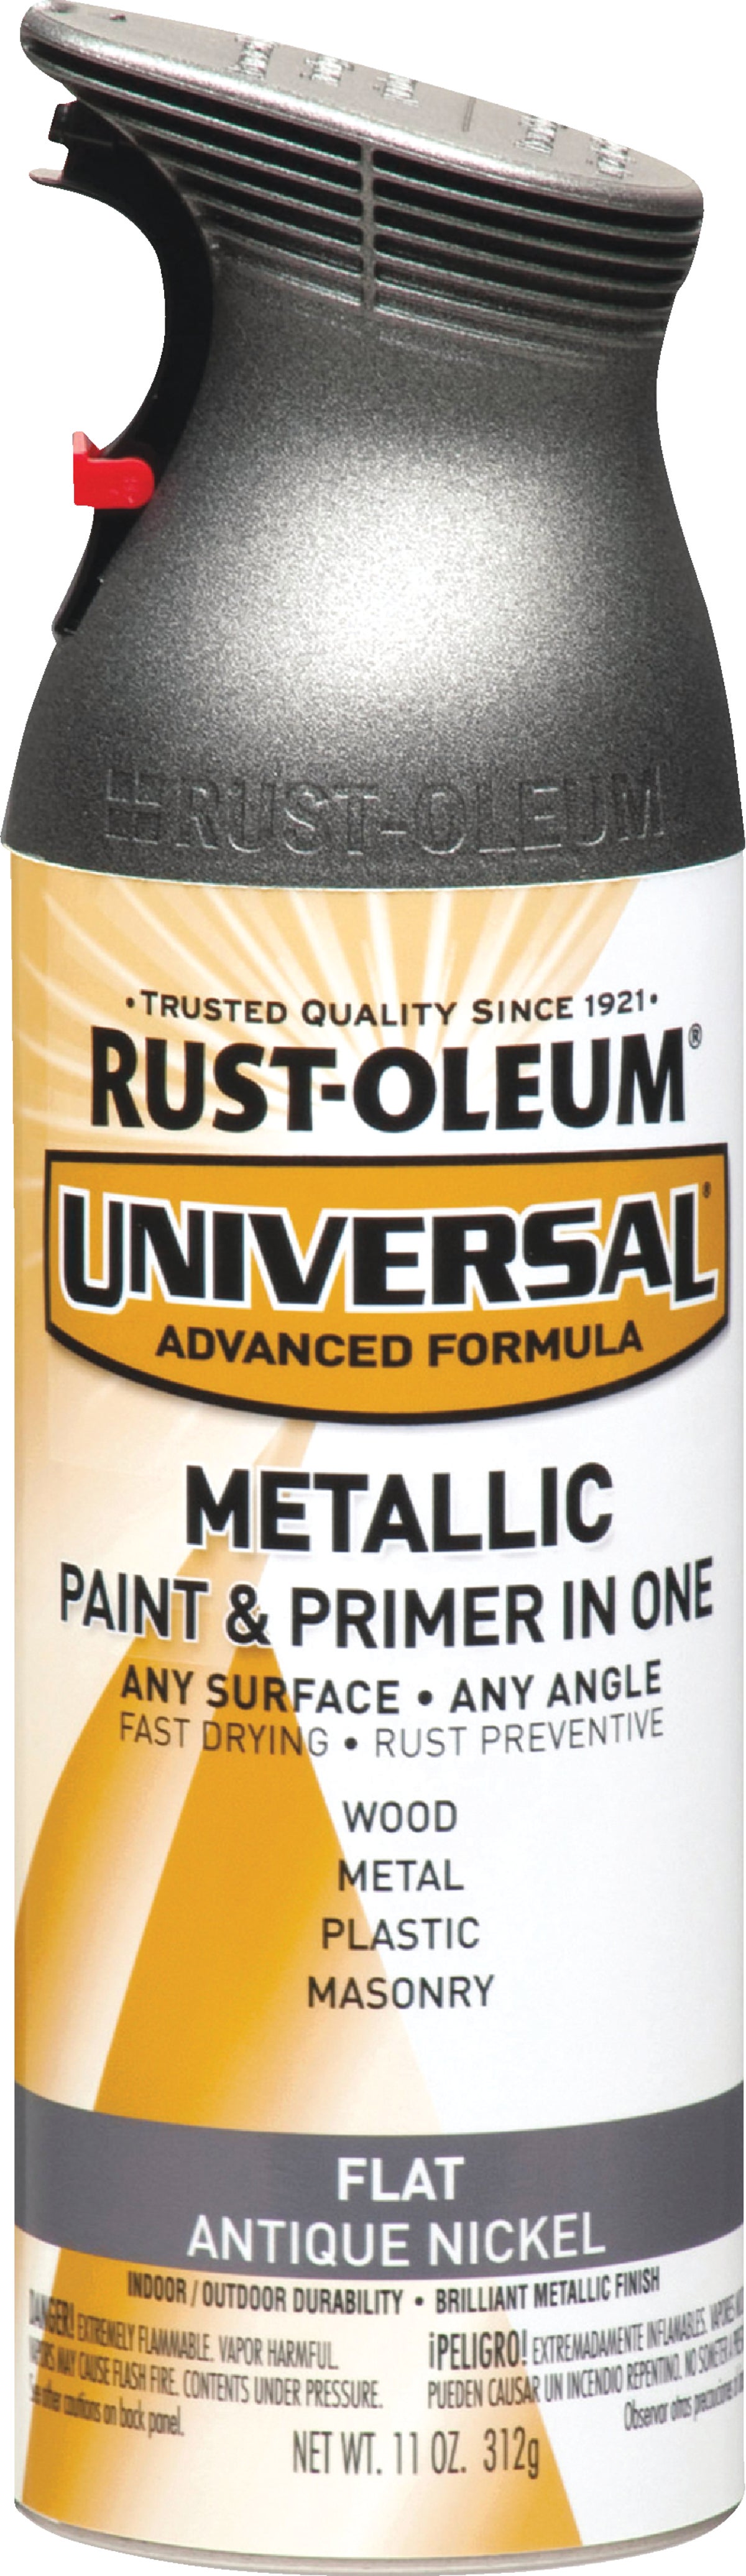 Titanium Silver, Rust-Oleum Universal All Surface Interior/Exterior  Metallic Spray Paint, 11 oz